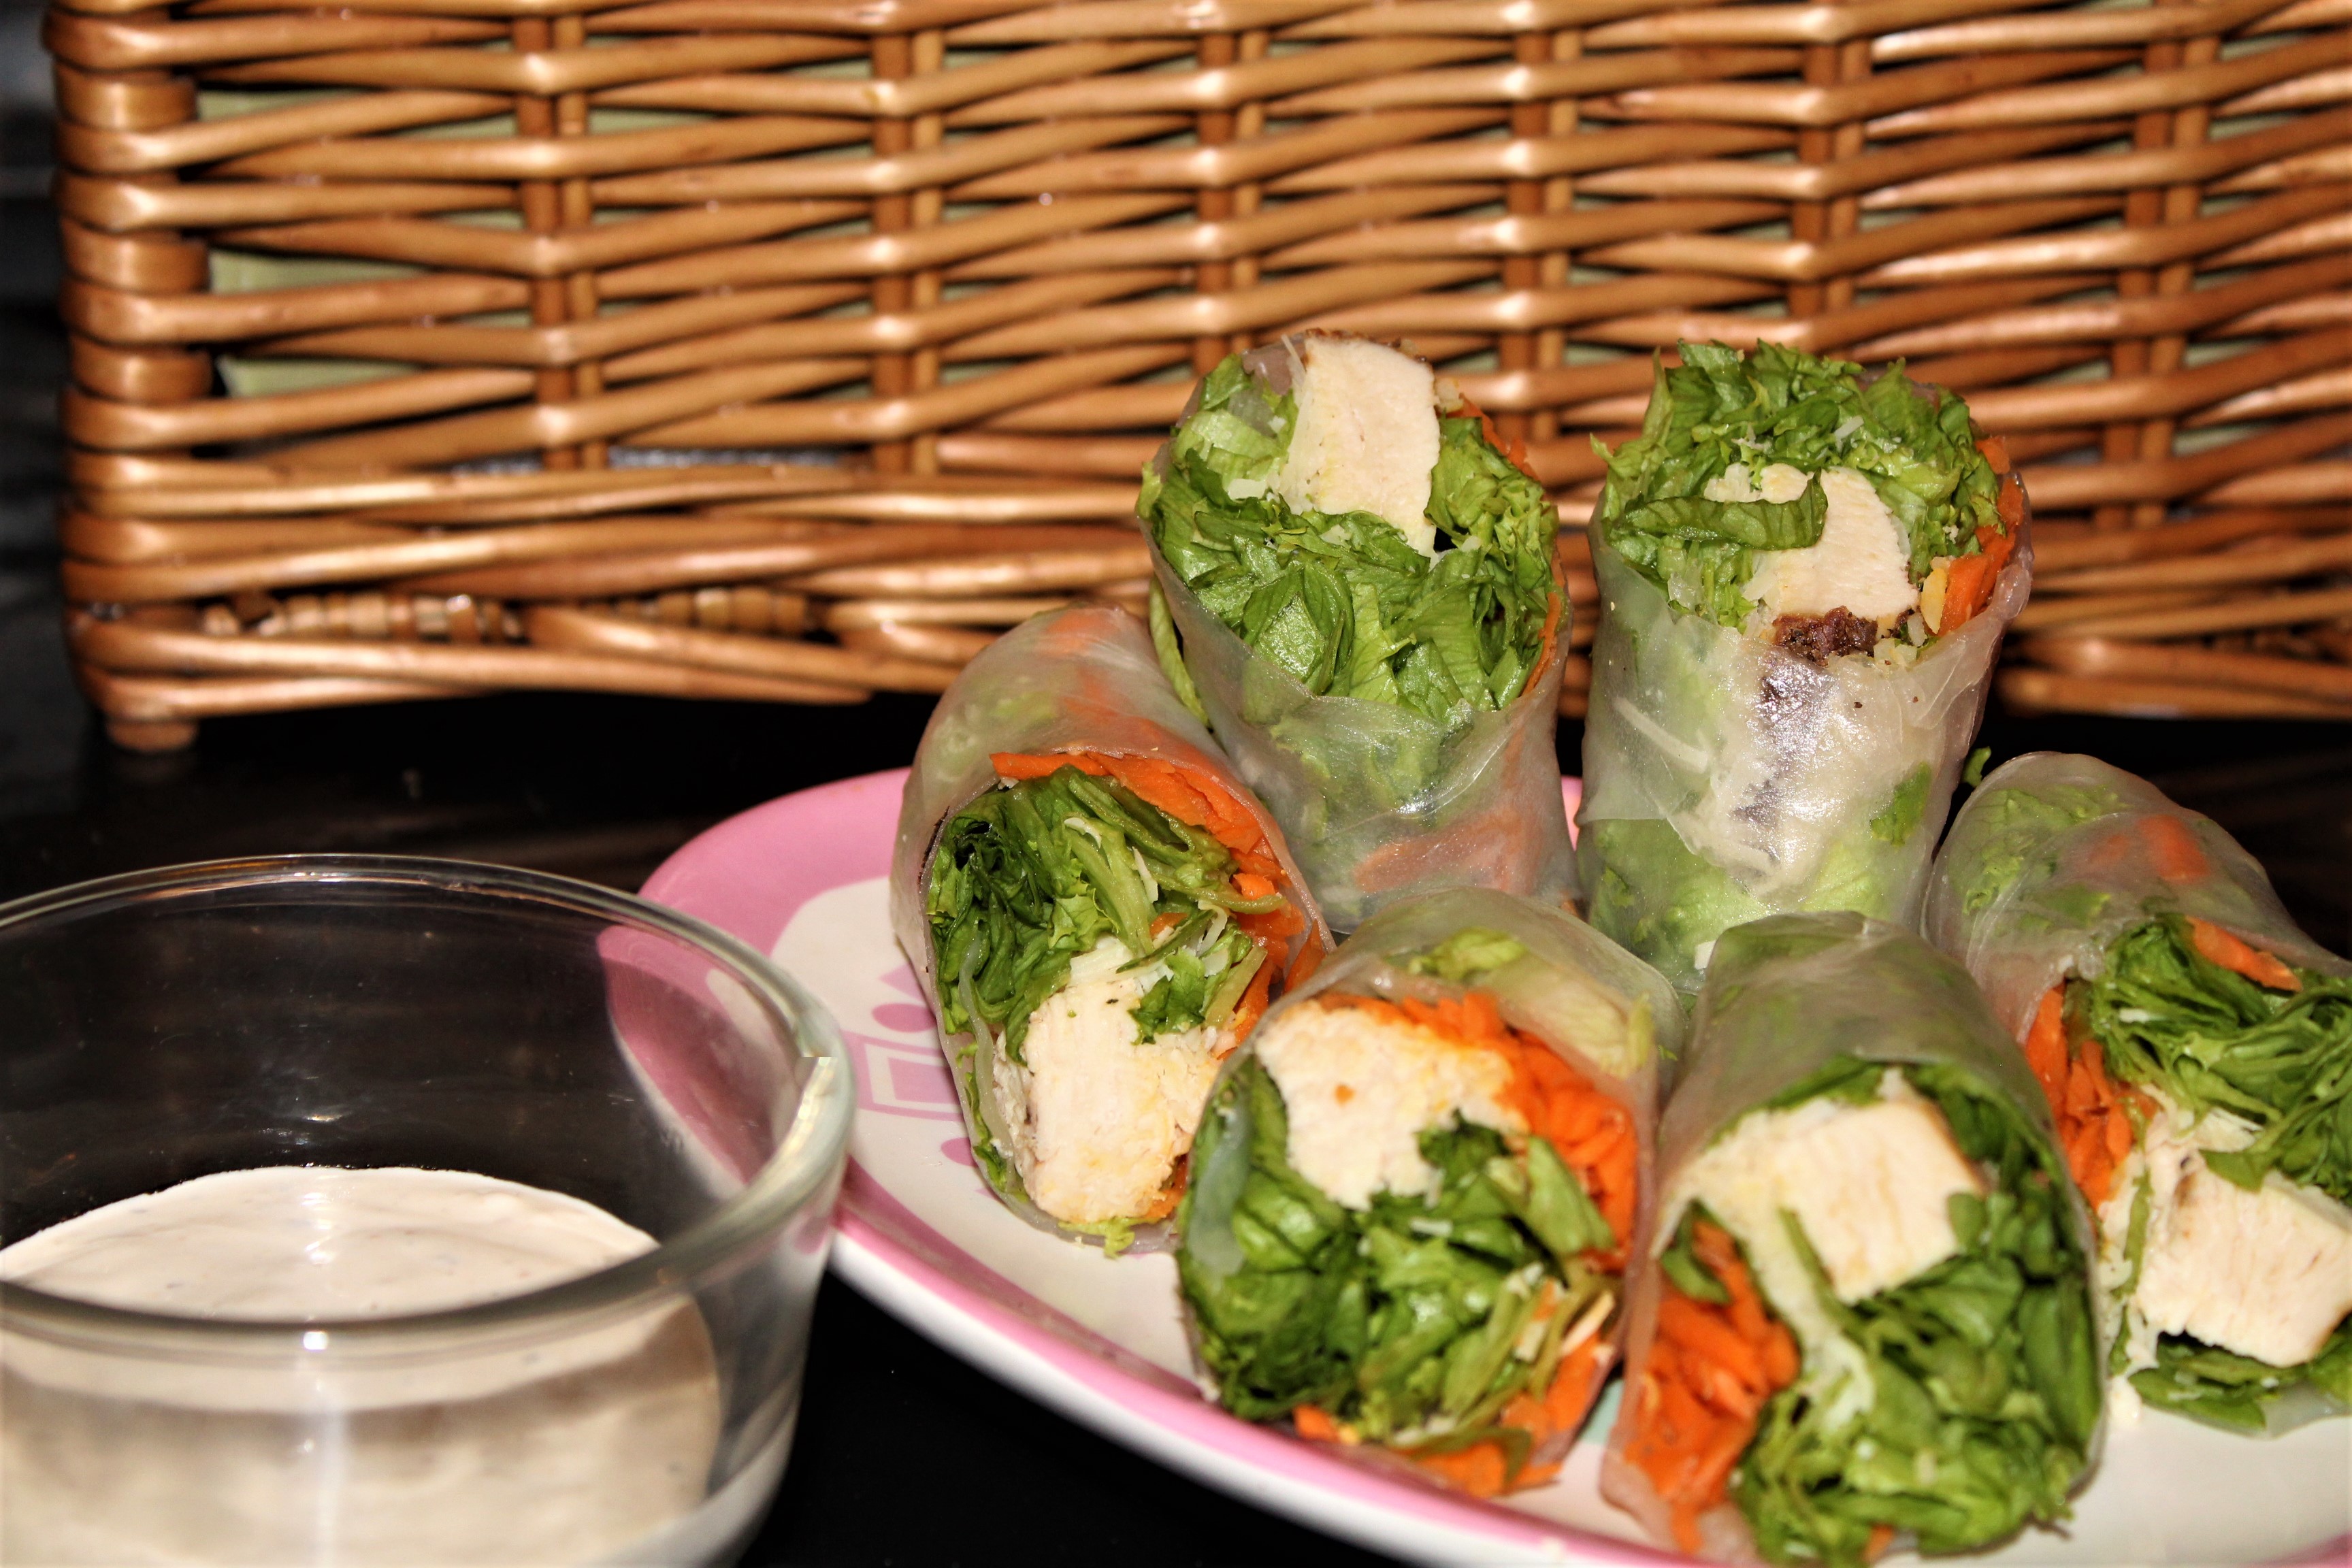 Caesar Salad Spring rolls